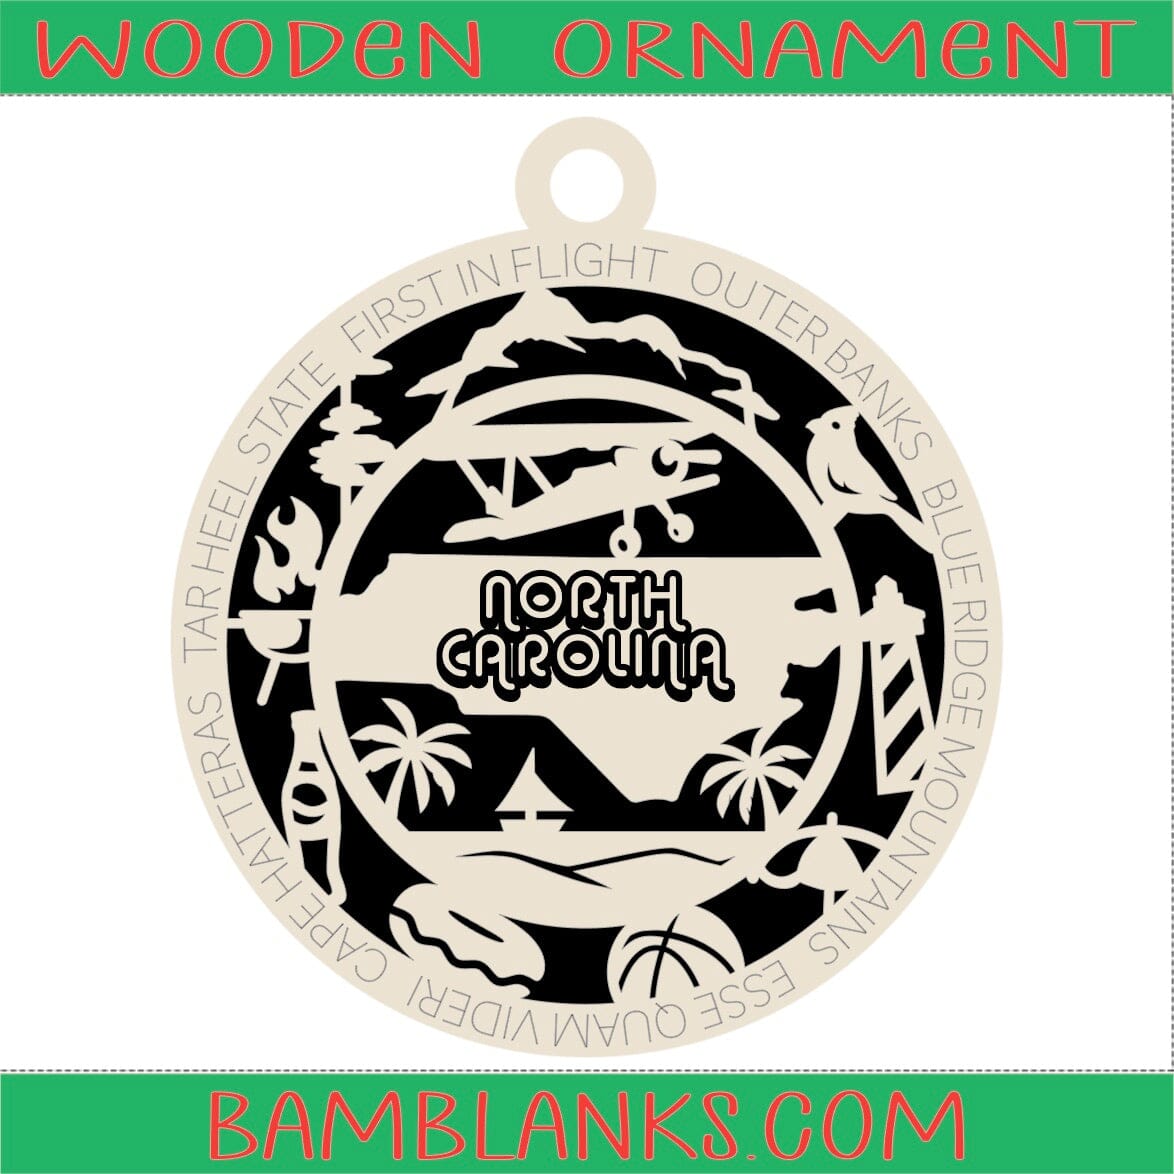 North Carolina - Wood Ornament #W084